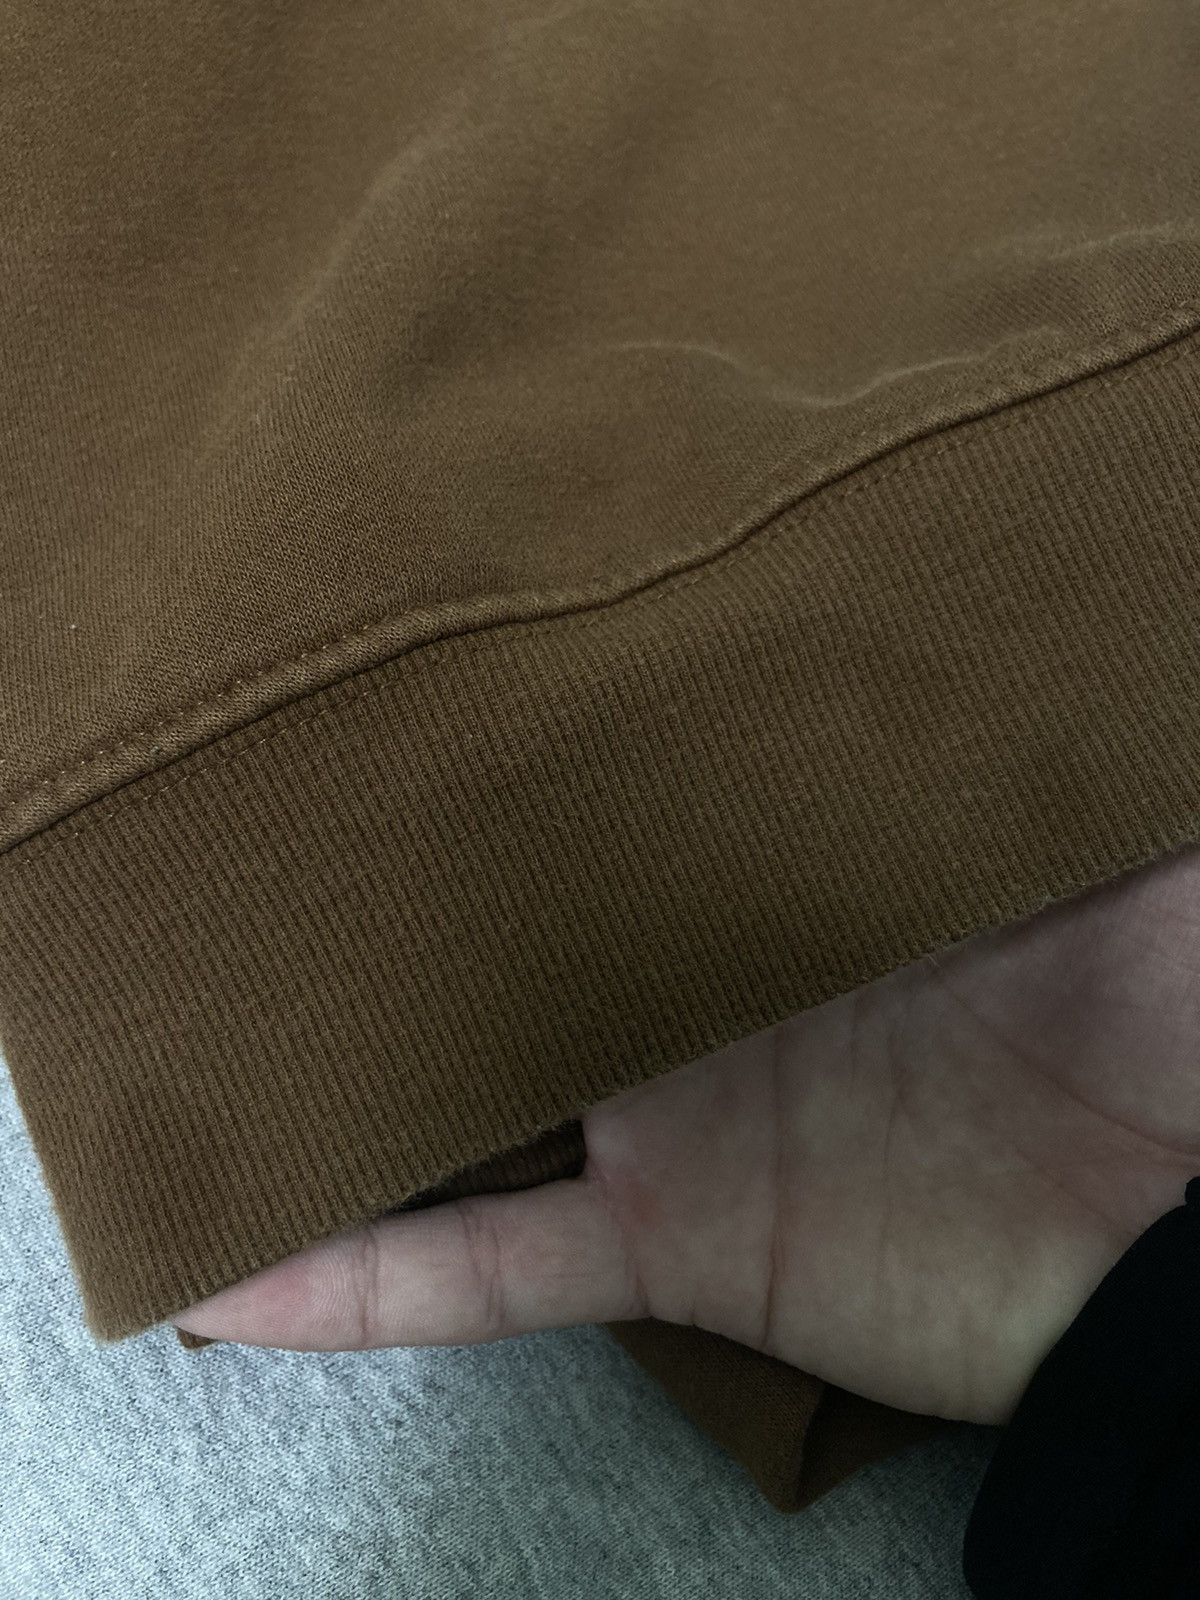 Nike nike vintage sweatshirt brown beige center logo custom made Size US L / EU 52-54 / 3 - 6 Preview